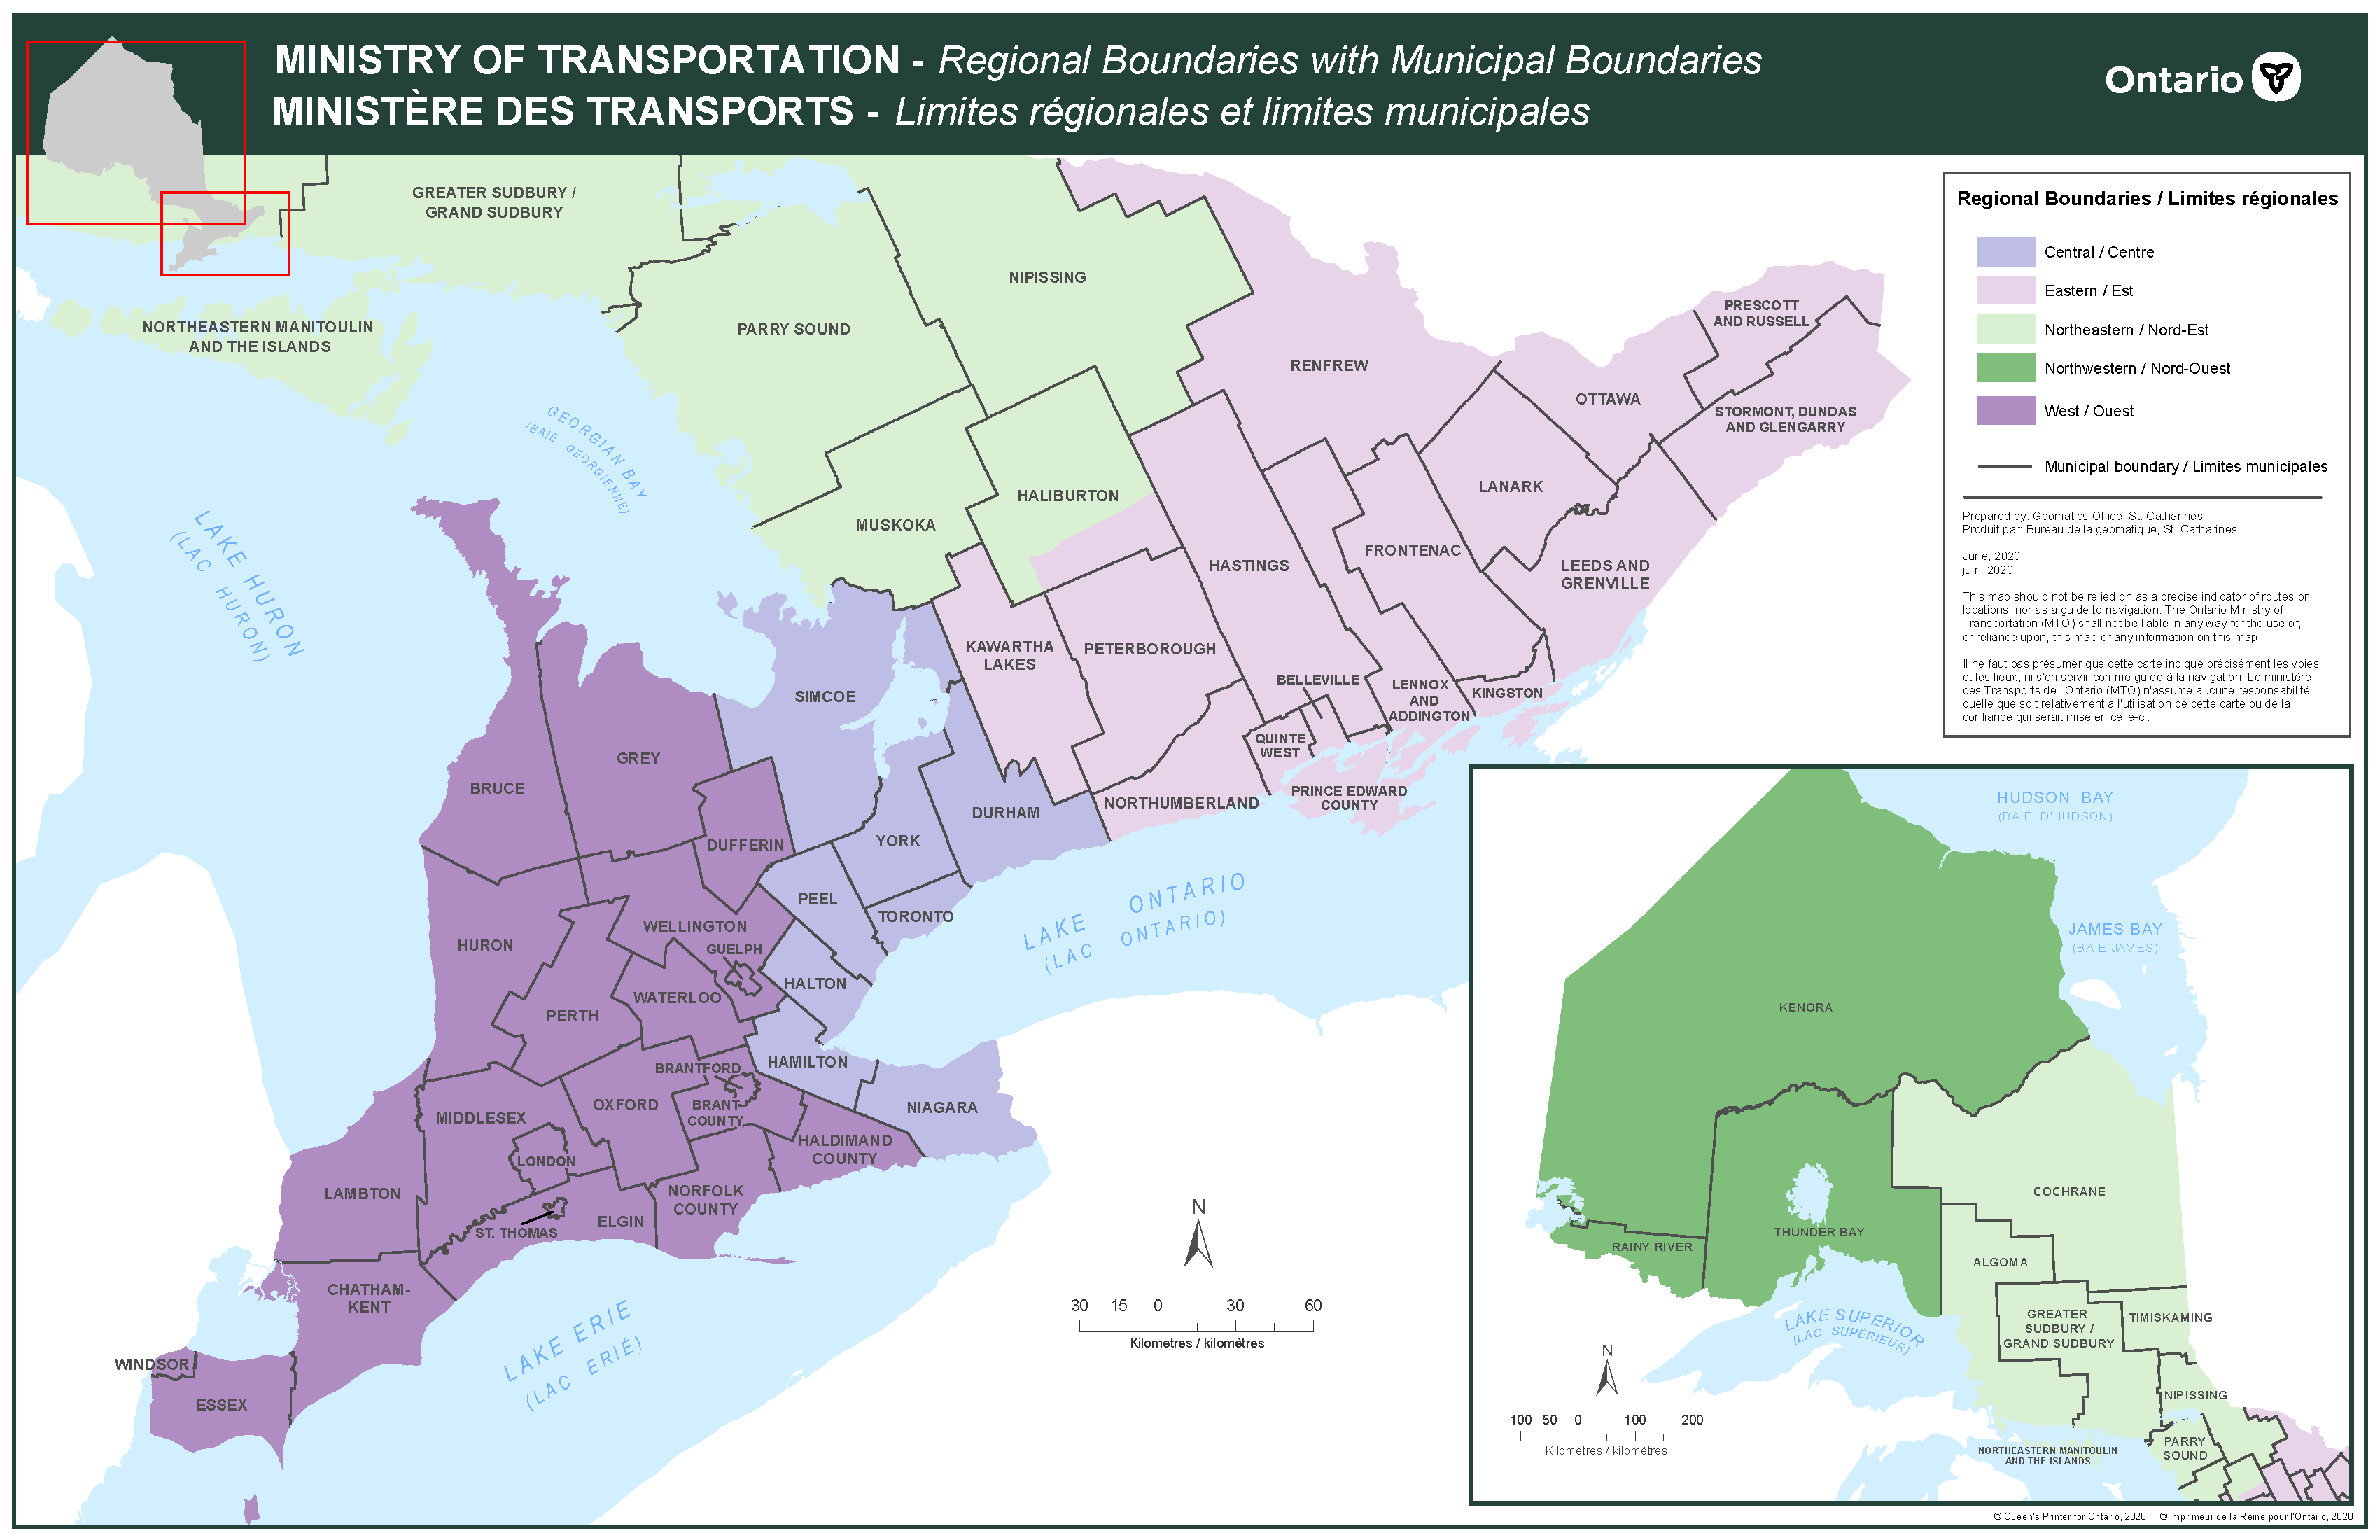 Ministry of Transportation regional boundaries map with municipal boundaries